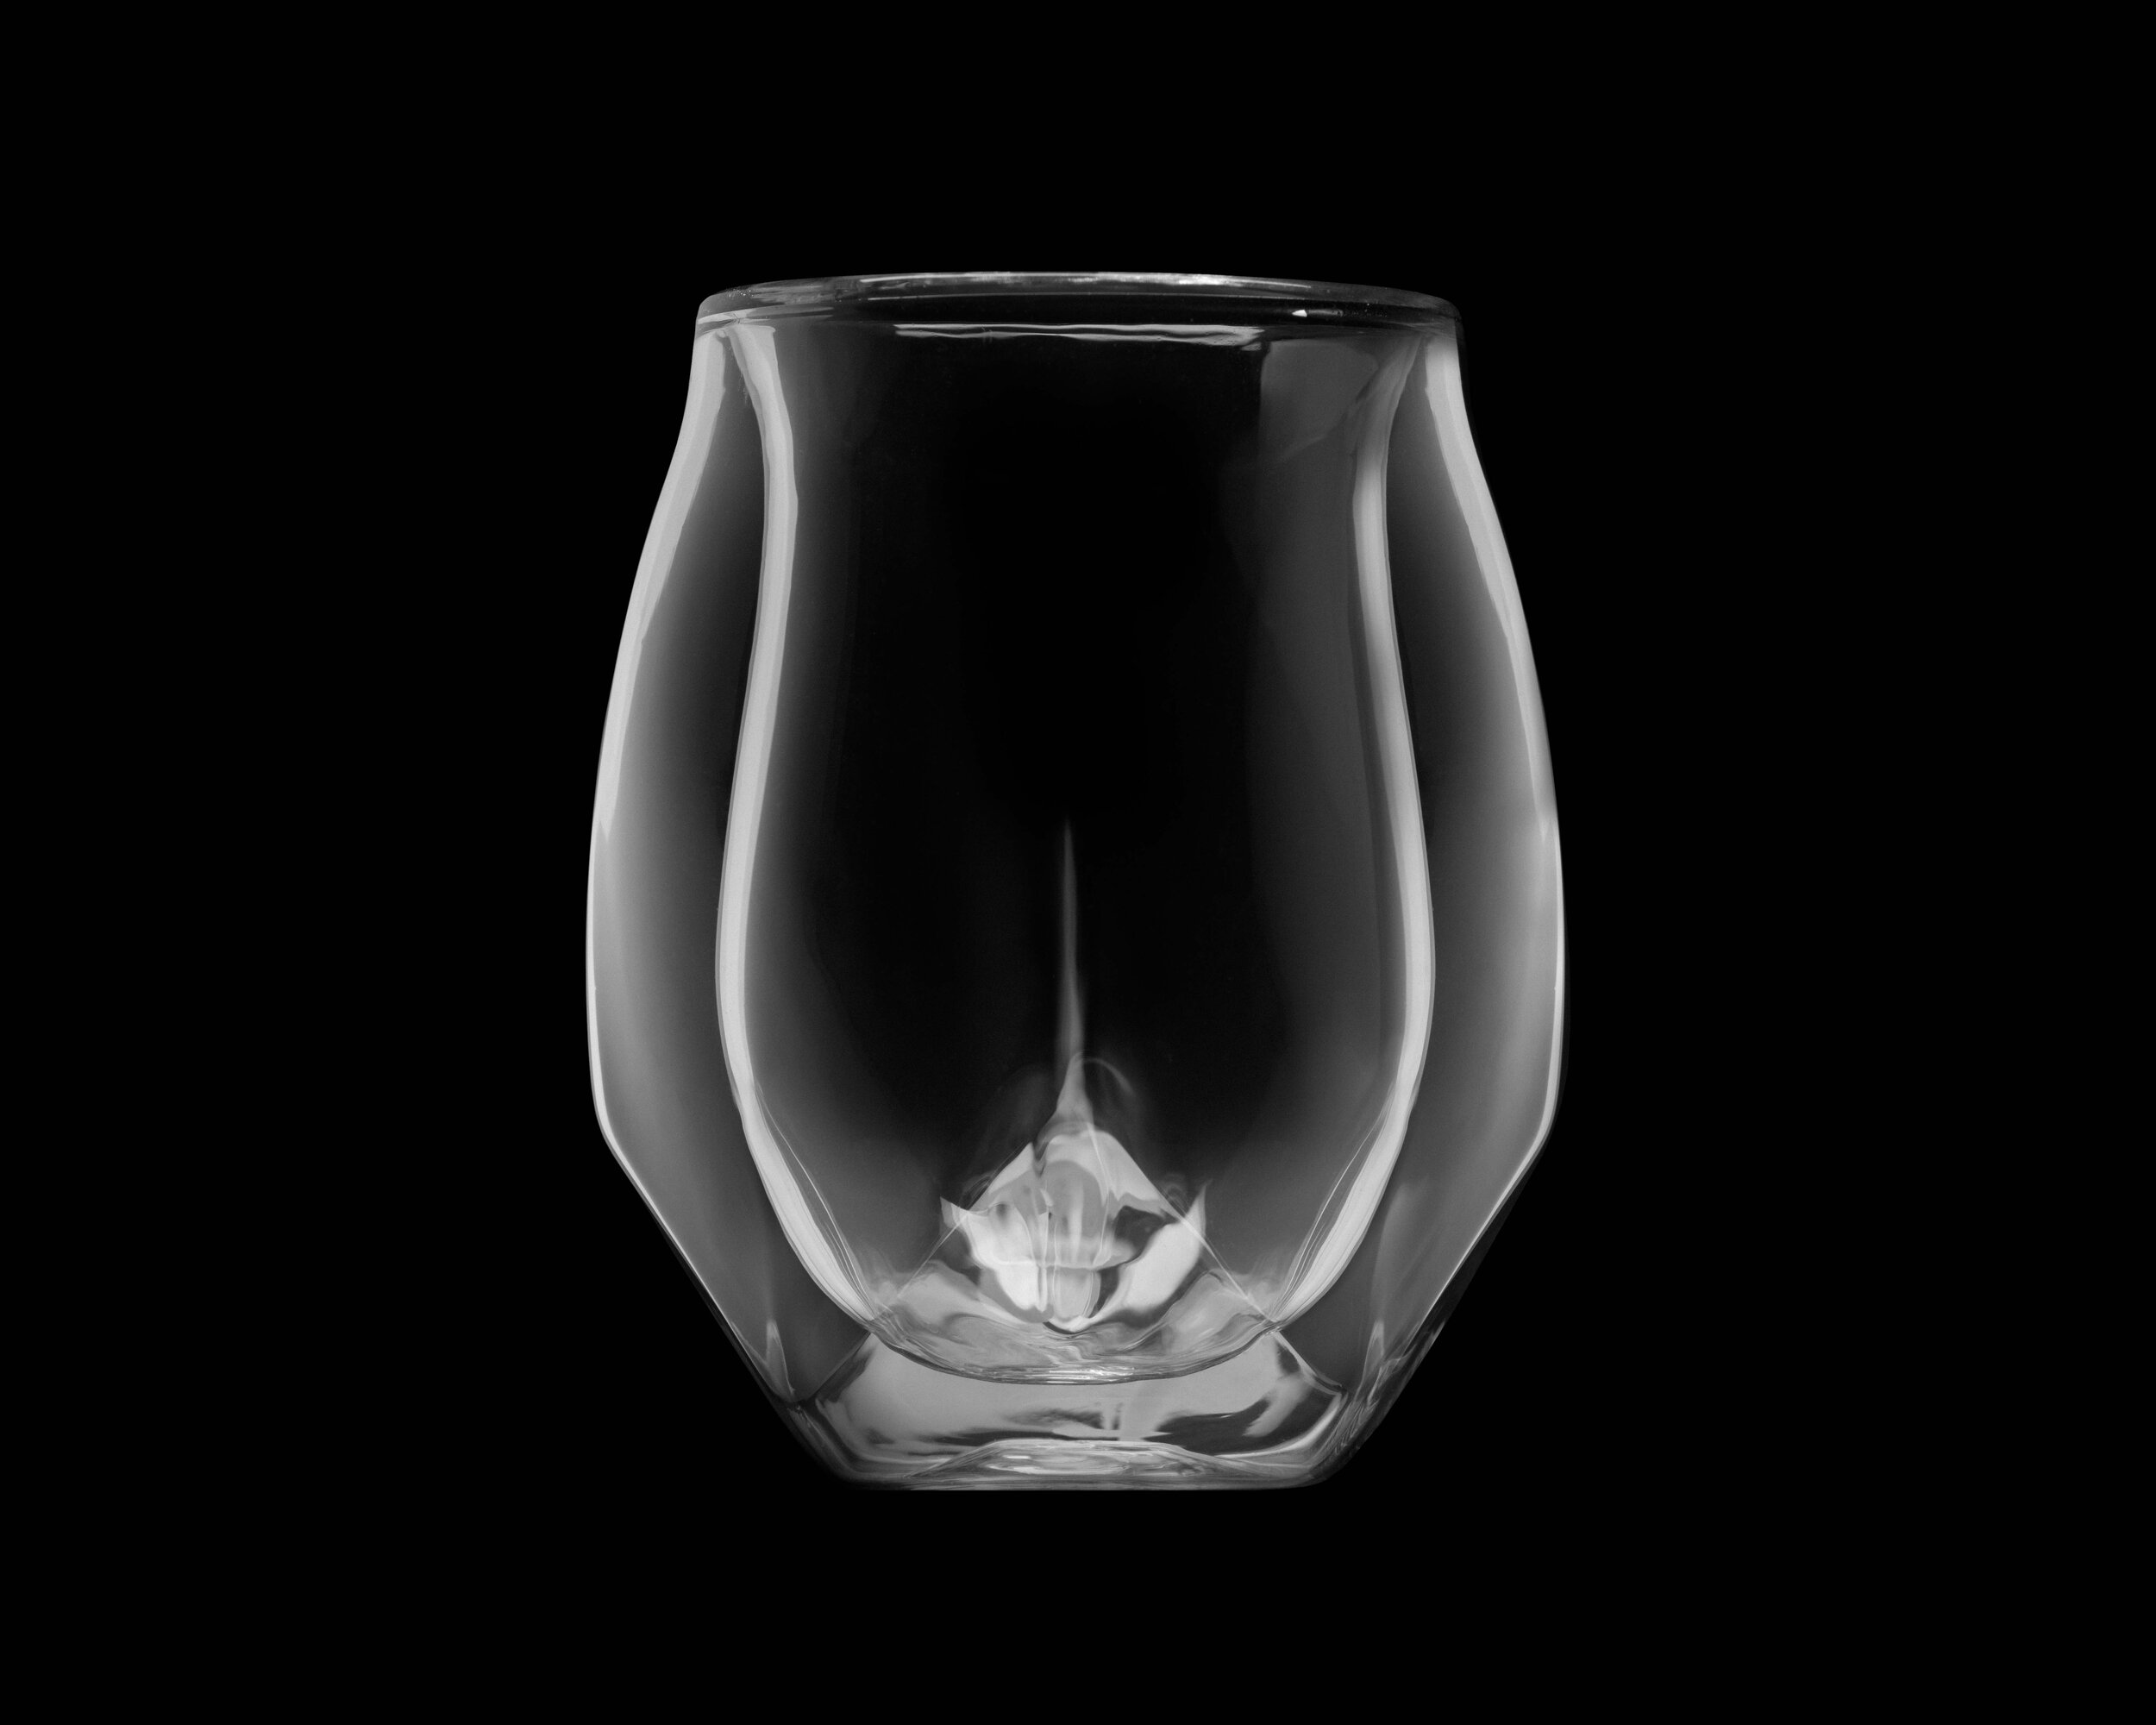 https://images.squarespace-cdn.com/content/v1/5bf5943e372b961c98256eb3/1595843544330-4N4I9V5ASJRZHR1YAAR7/Norlan-Whisky-Glass-Front-Empty.jpg